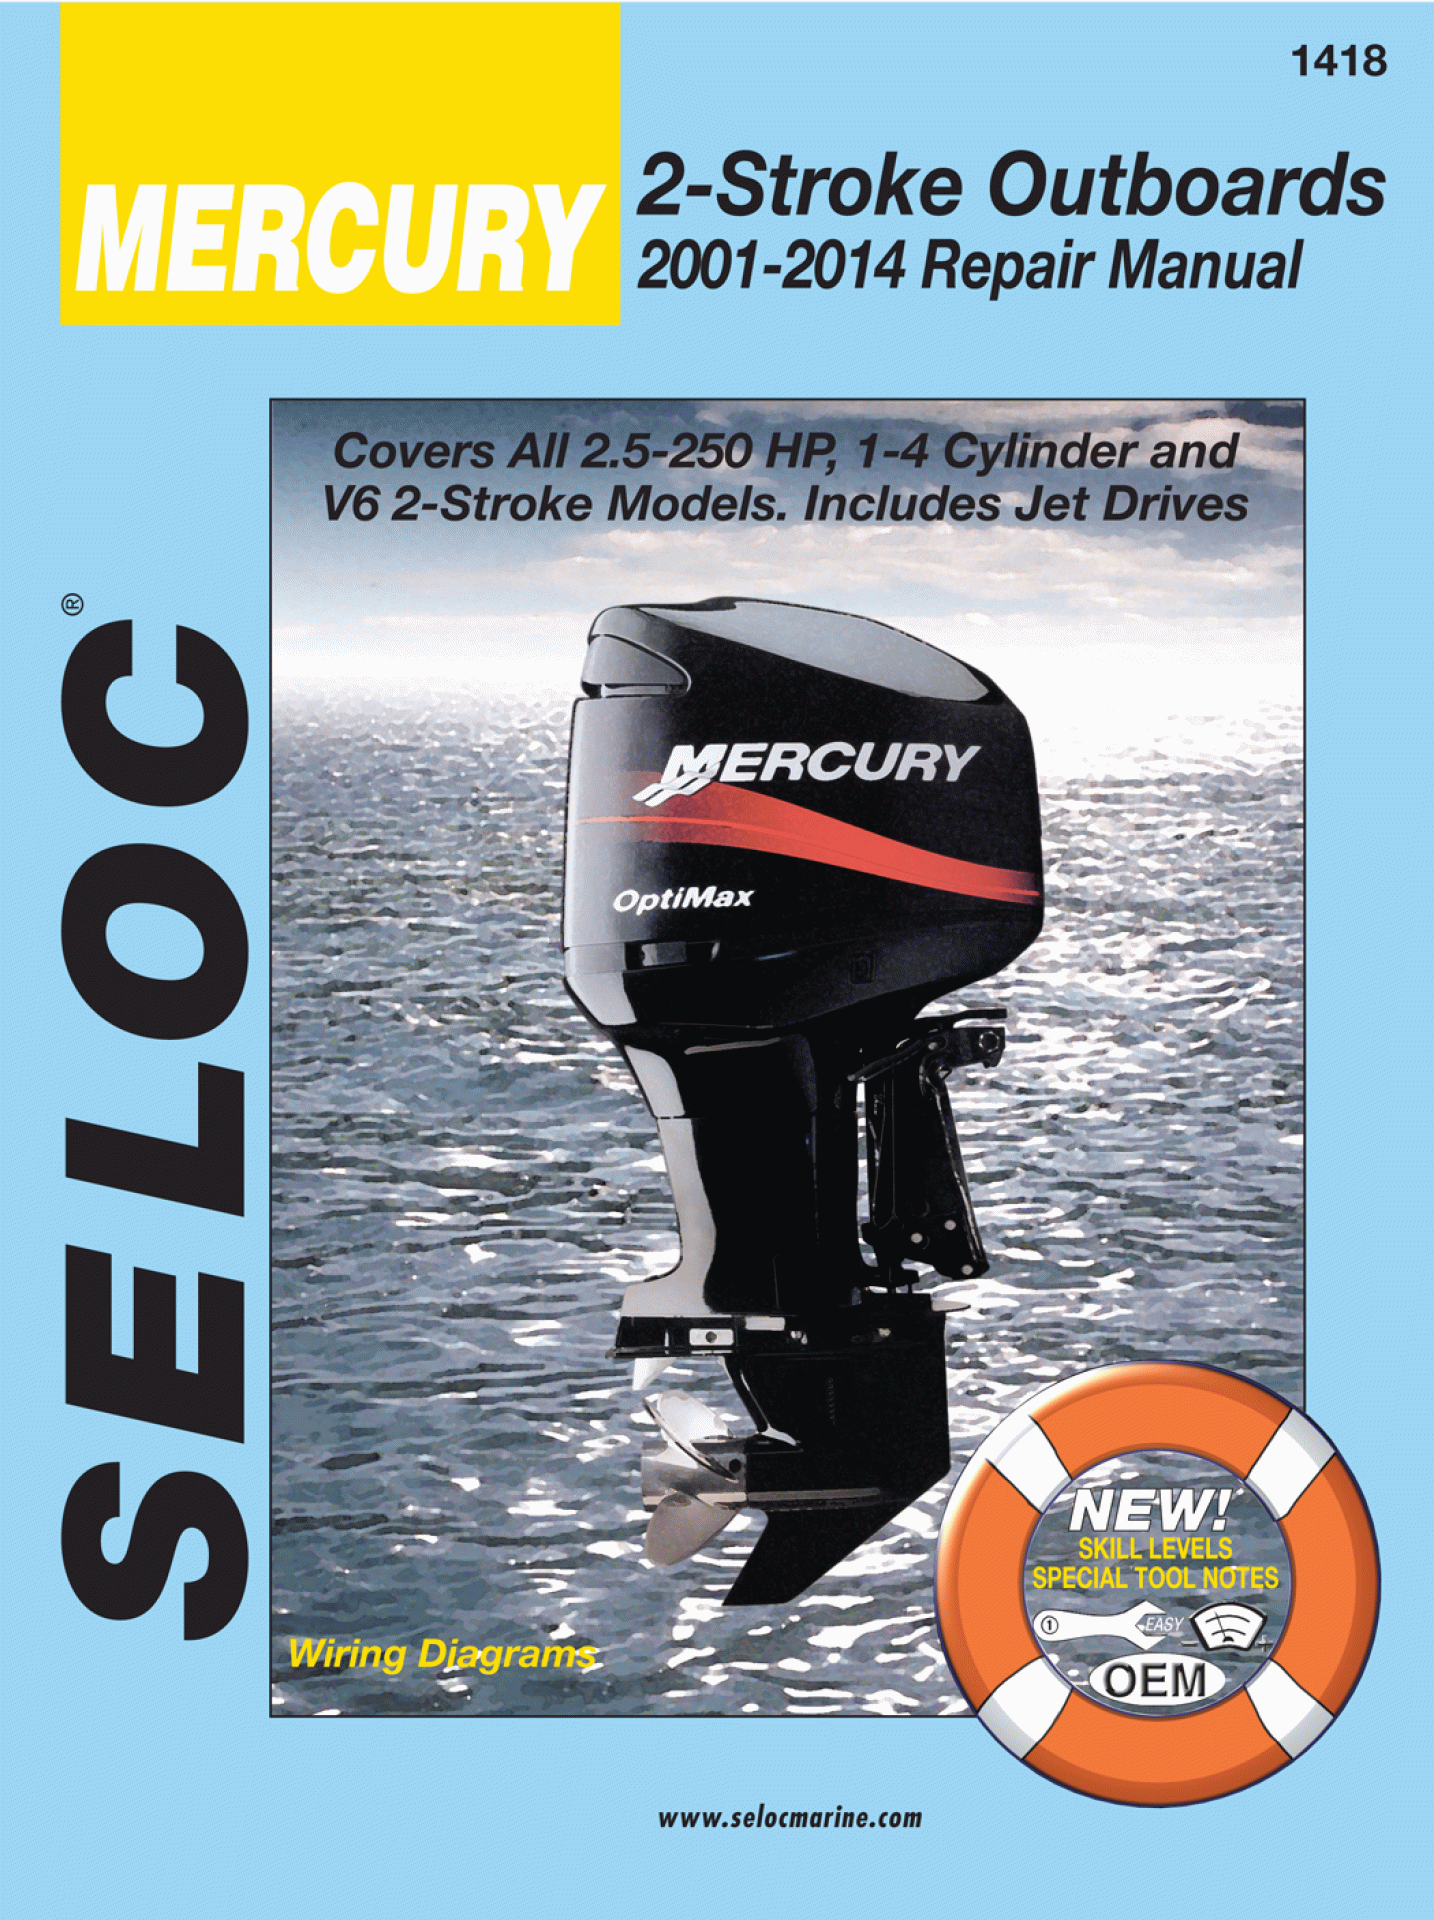 SELOC PUBLISHING | 18-01418 | REPAIR MANUAL MERCURY OUTBOARD ALL 2 STROKE 2001-2014